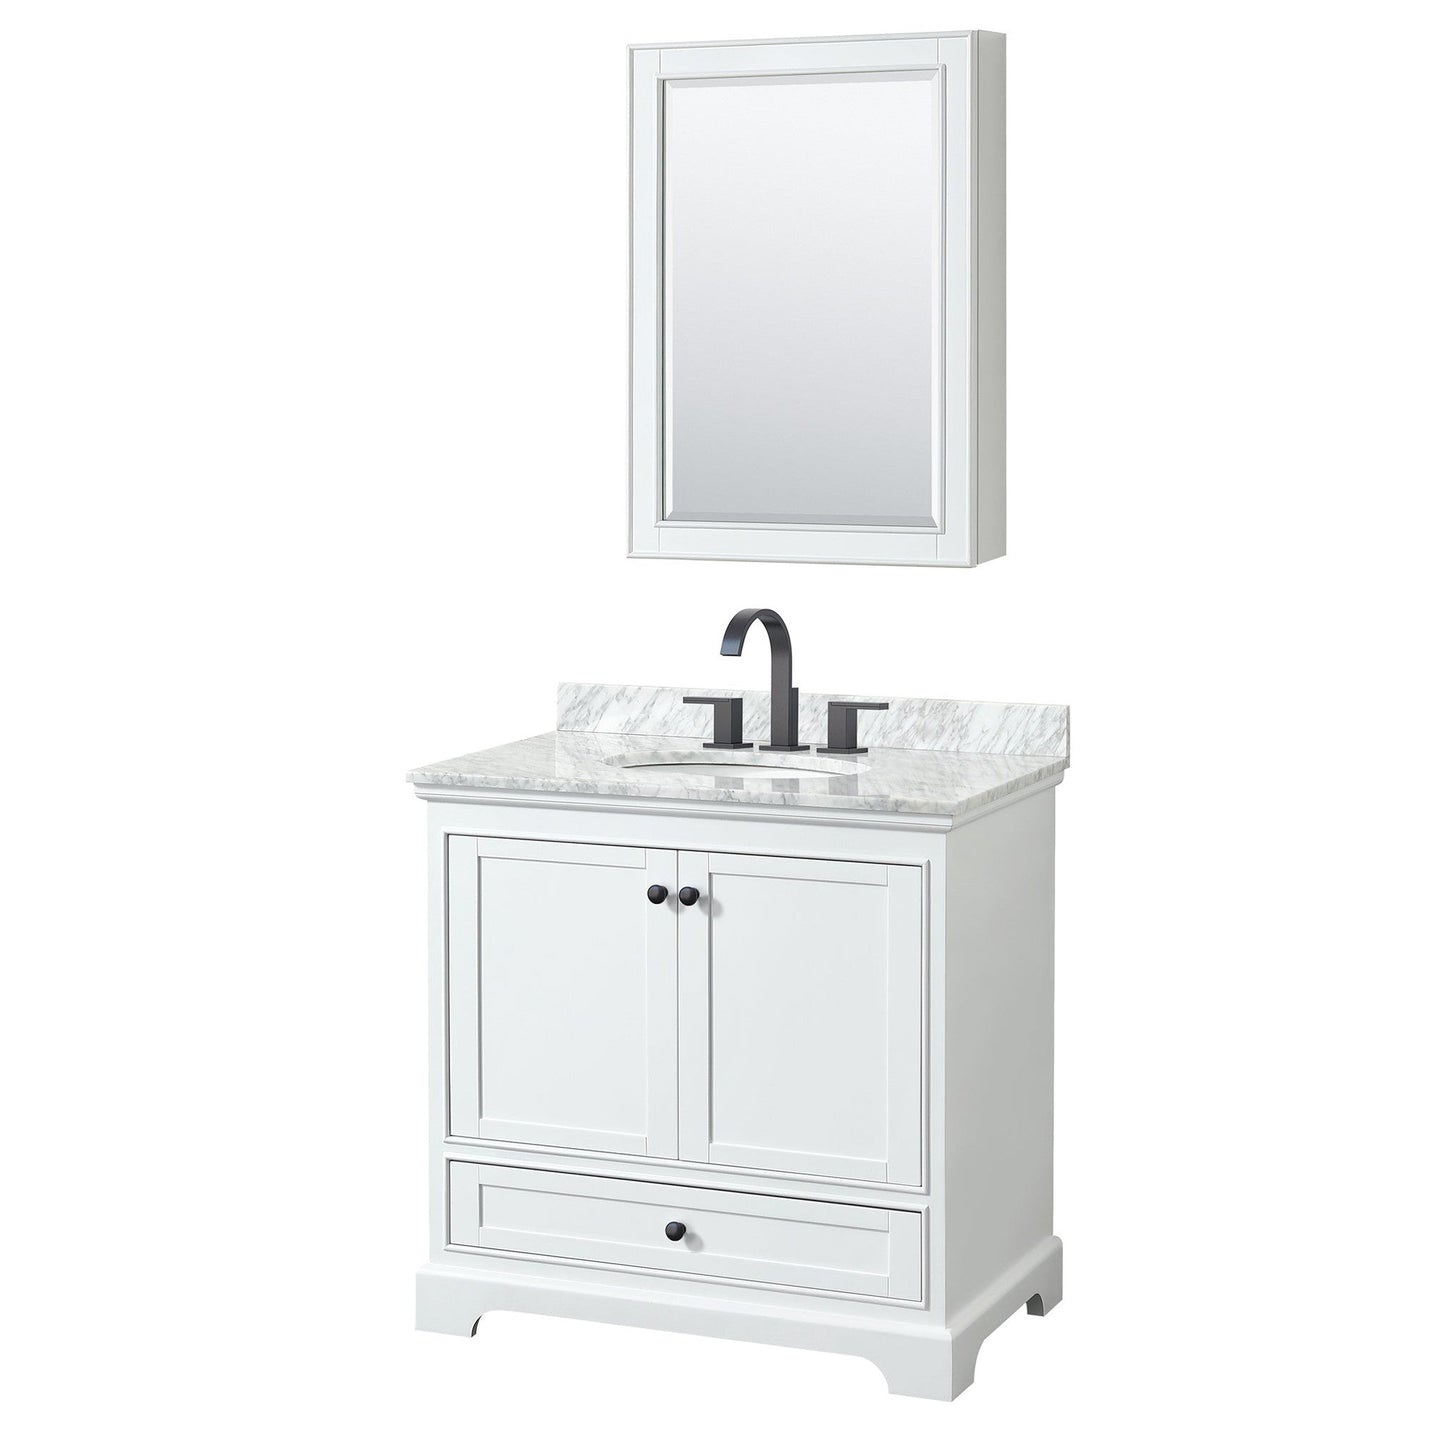 Deborah 36" Single Bathroom Vanity in White, White Carrara Marble Countertop, Undermount Oval Sink, Matte Black Trim, Medicine Cabinet